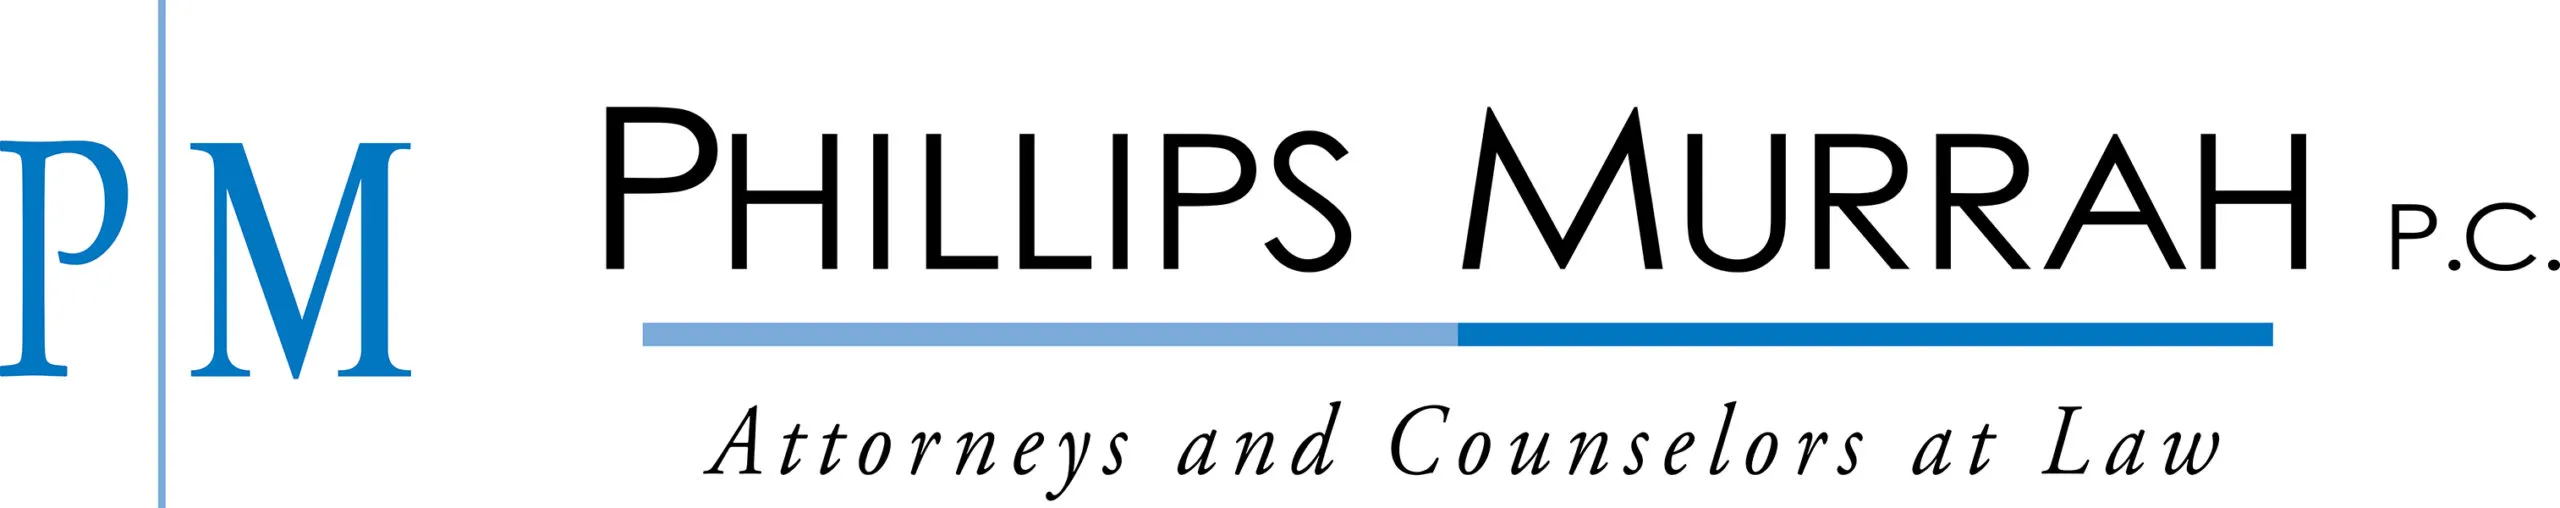 Phillips Murrah_Full-Logo-Color-1000px-150dpi-scaled